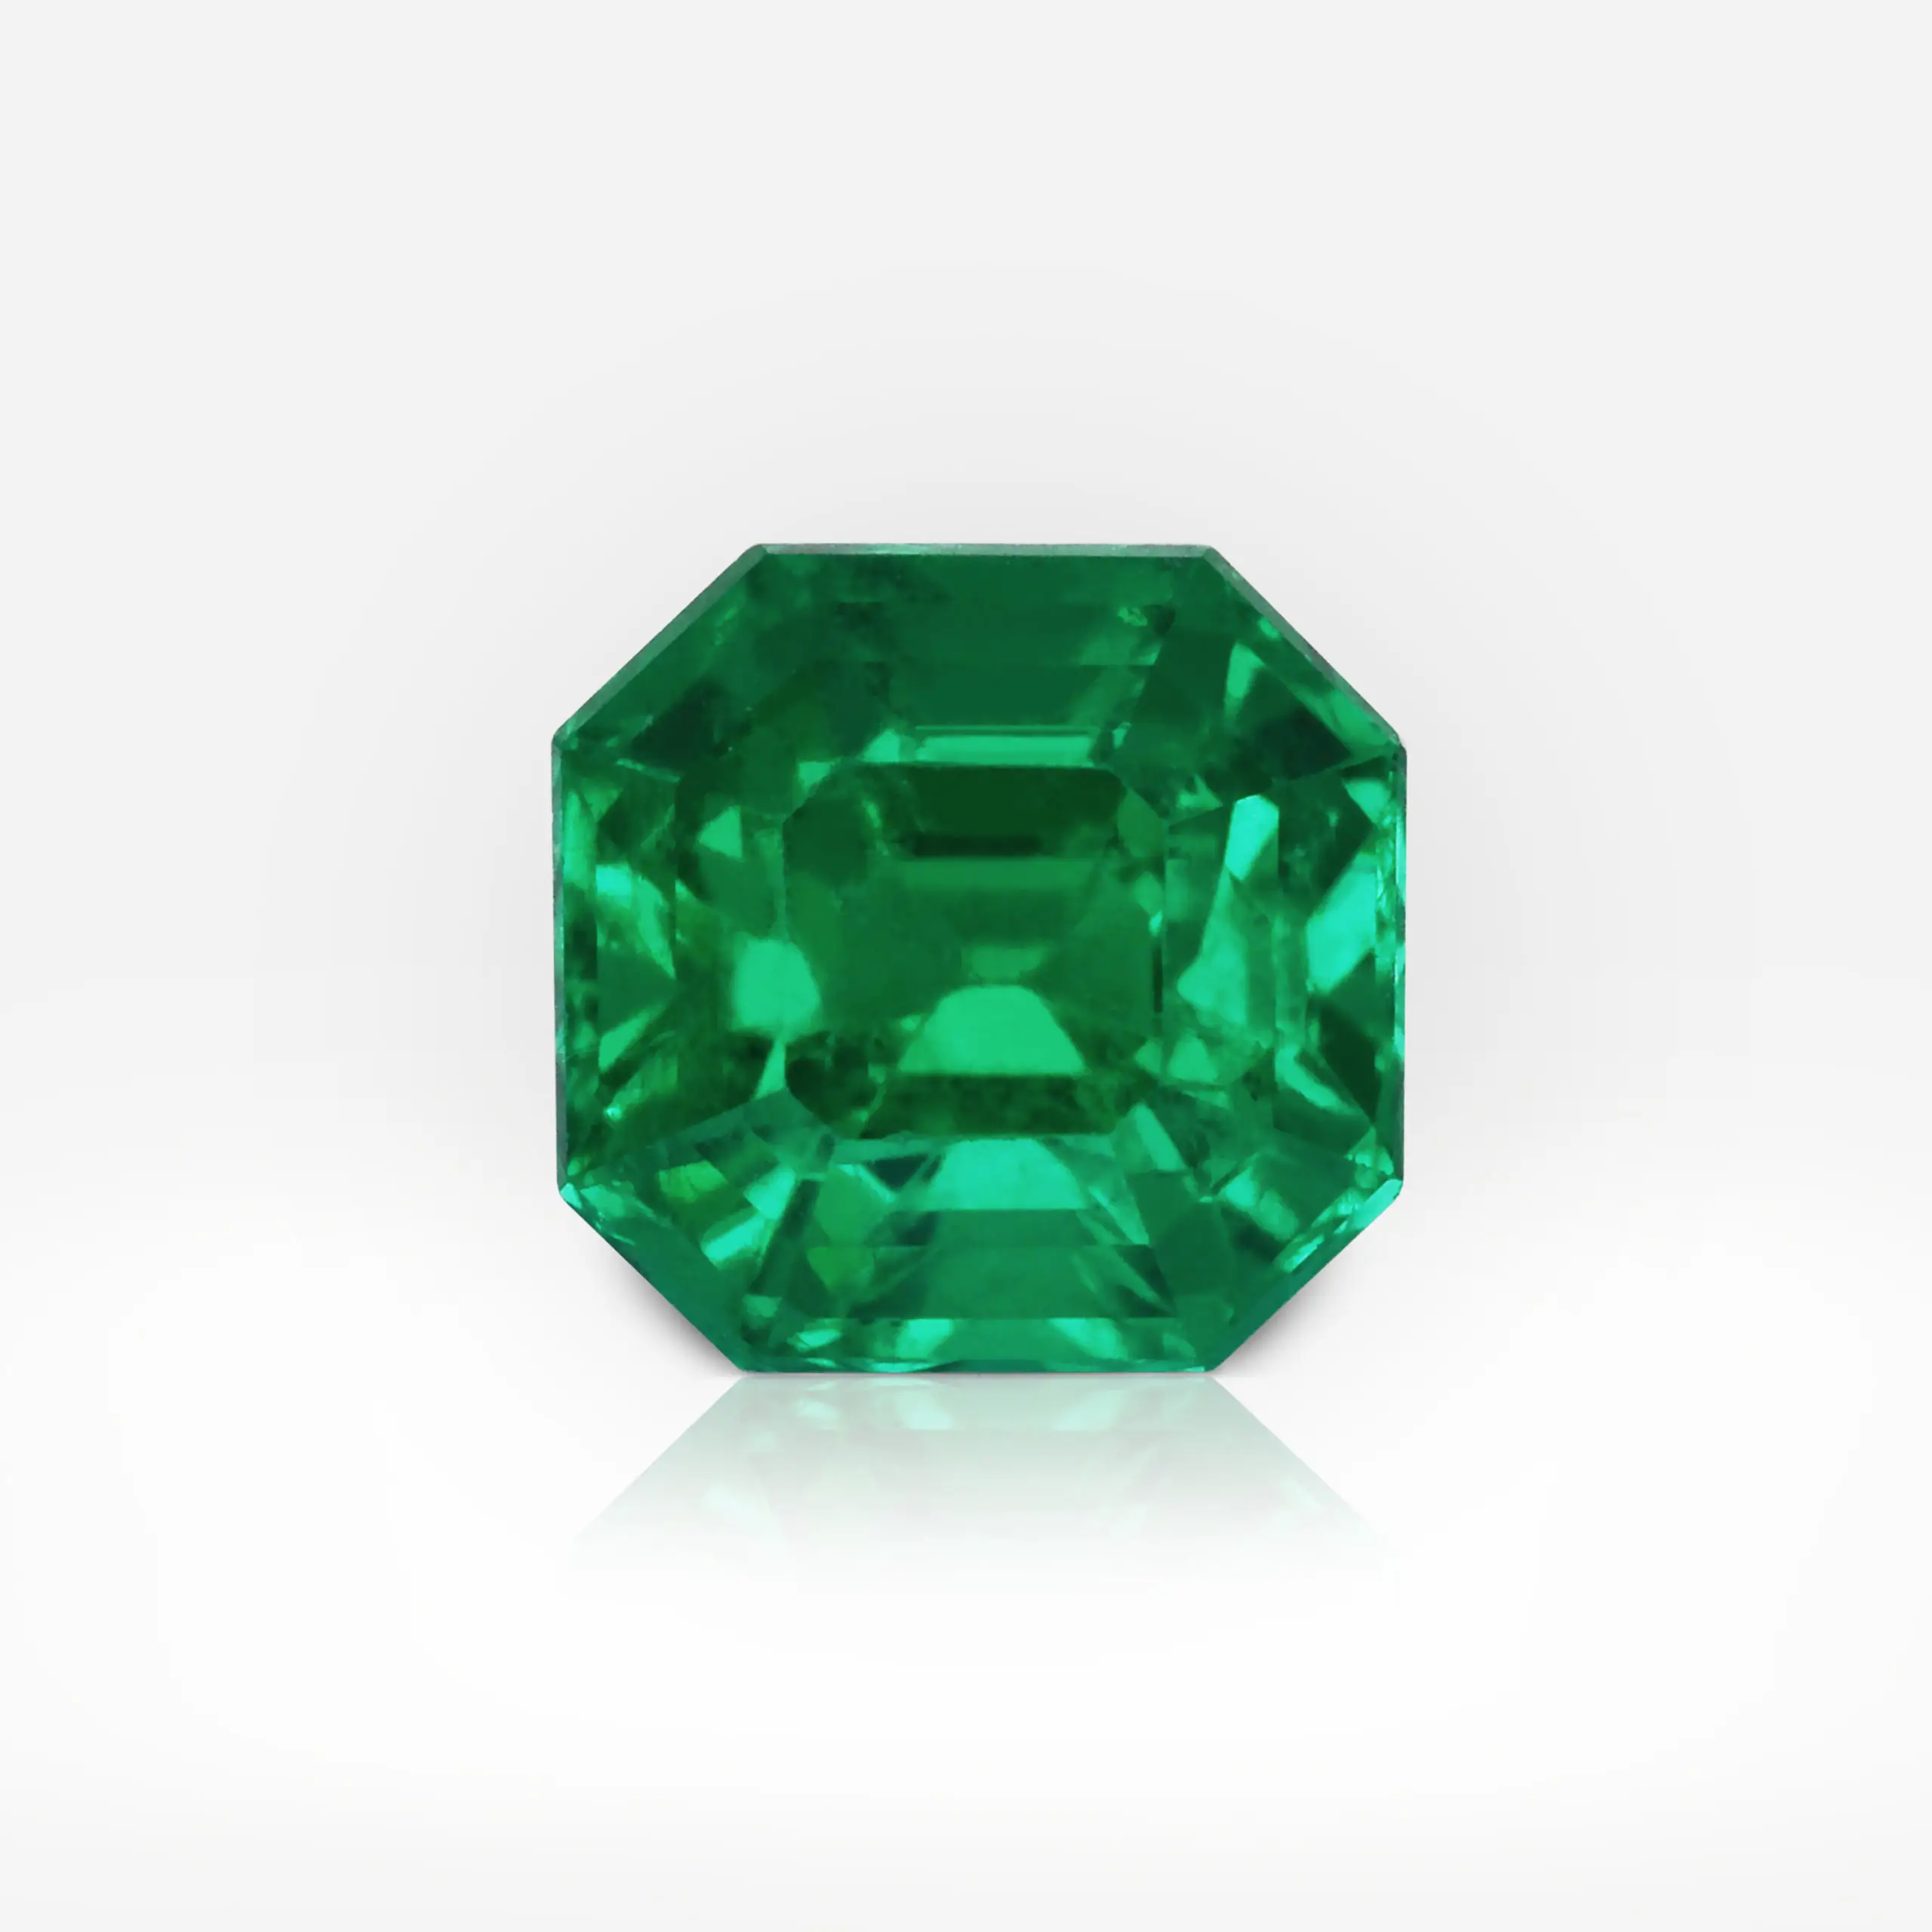 2.02 carat Octagonal Shape Vivid Green Colombian Emerald GRS - picture 1